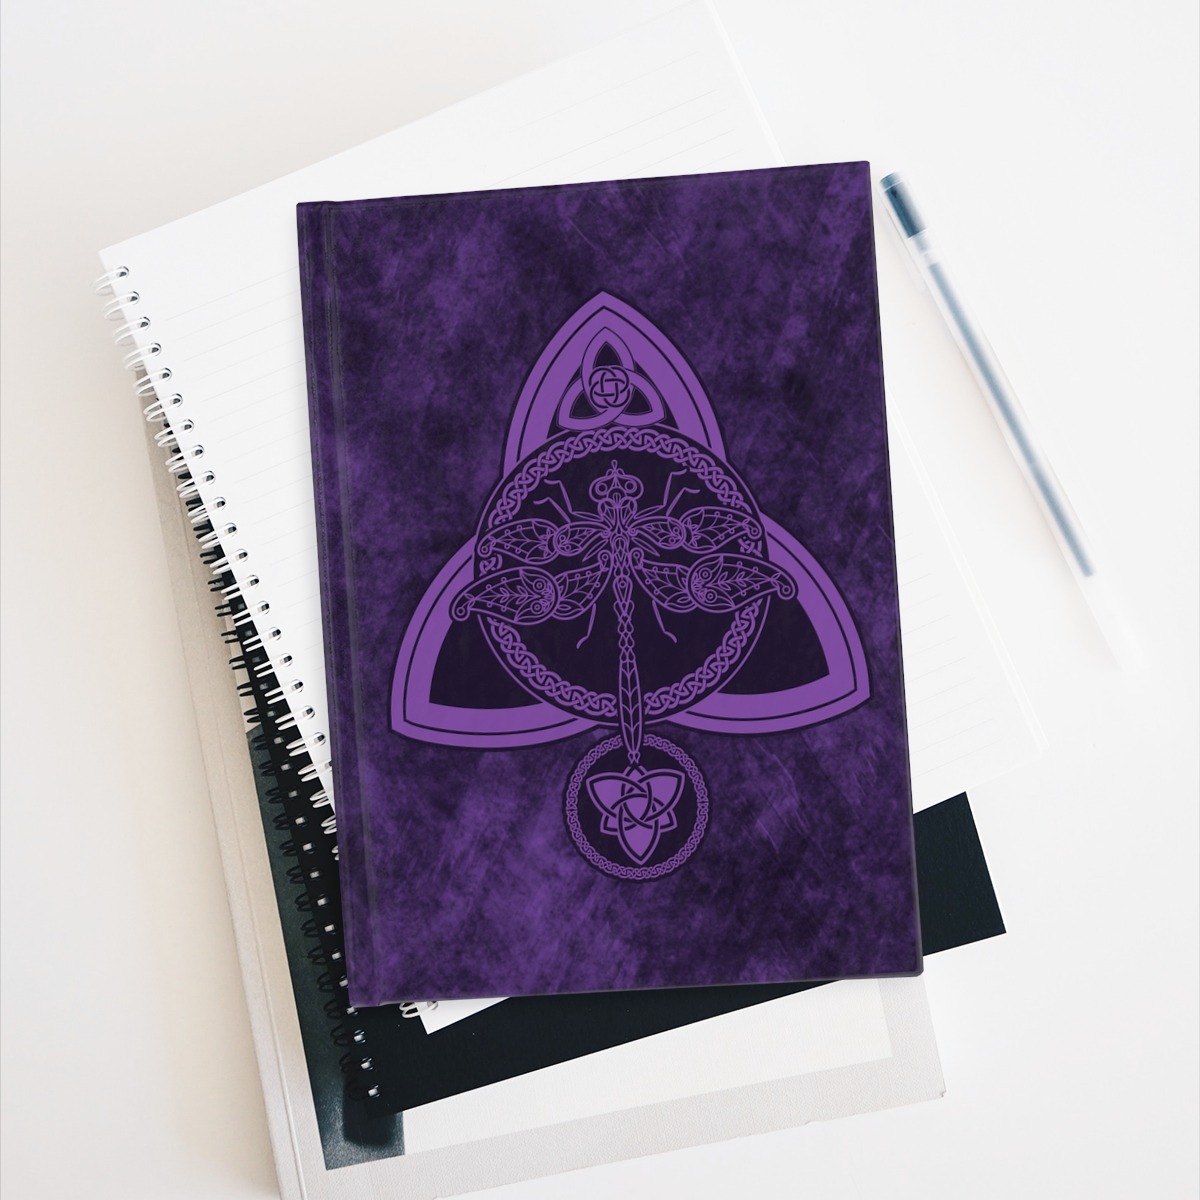 Purple Celtic Dragonfly Ruled Line Hardcover Journal